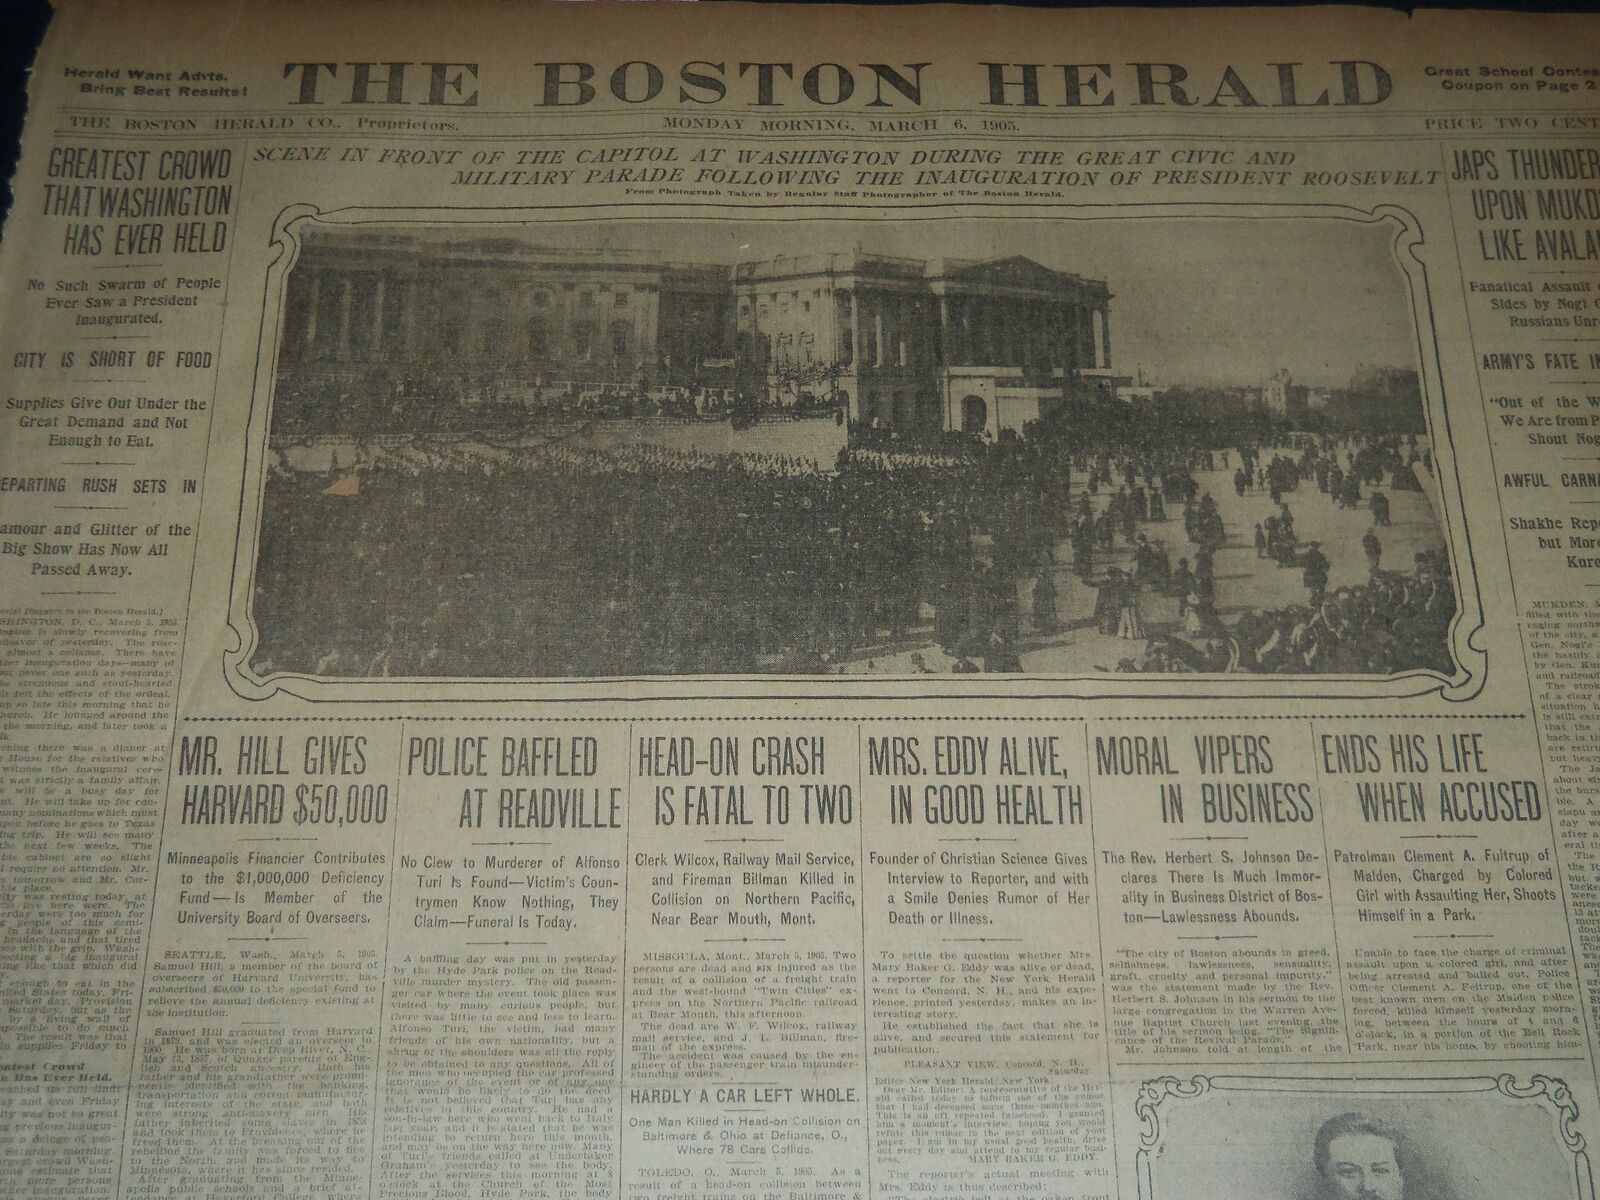 1905 MARCH 6 THE BOSTON HERALD - GREATEST CROWD WASHINGTON EVER HELD - BH 146